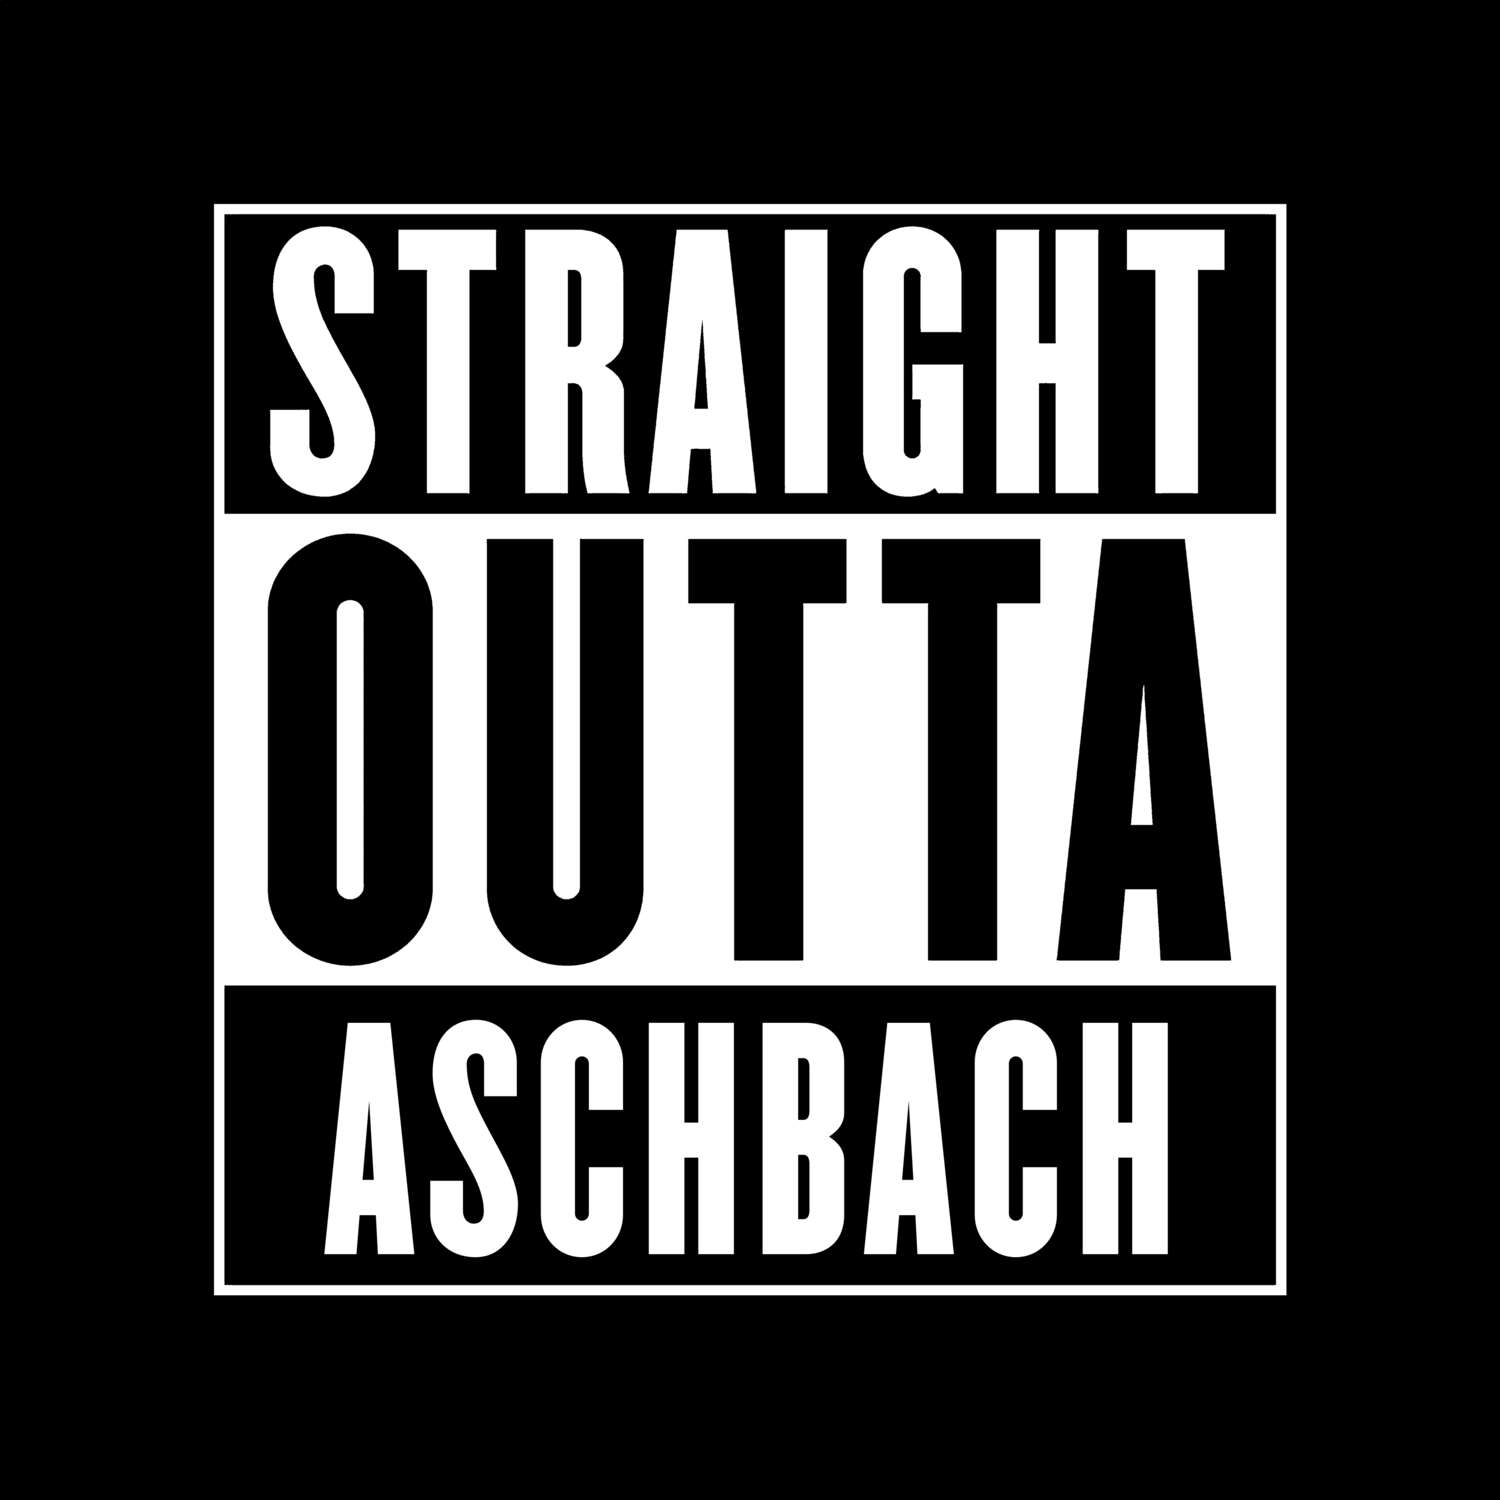 Aschbach T-Shirt »Straight Outta«